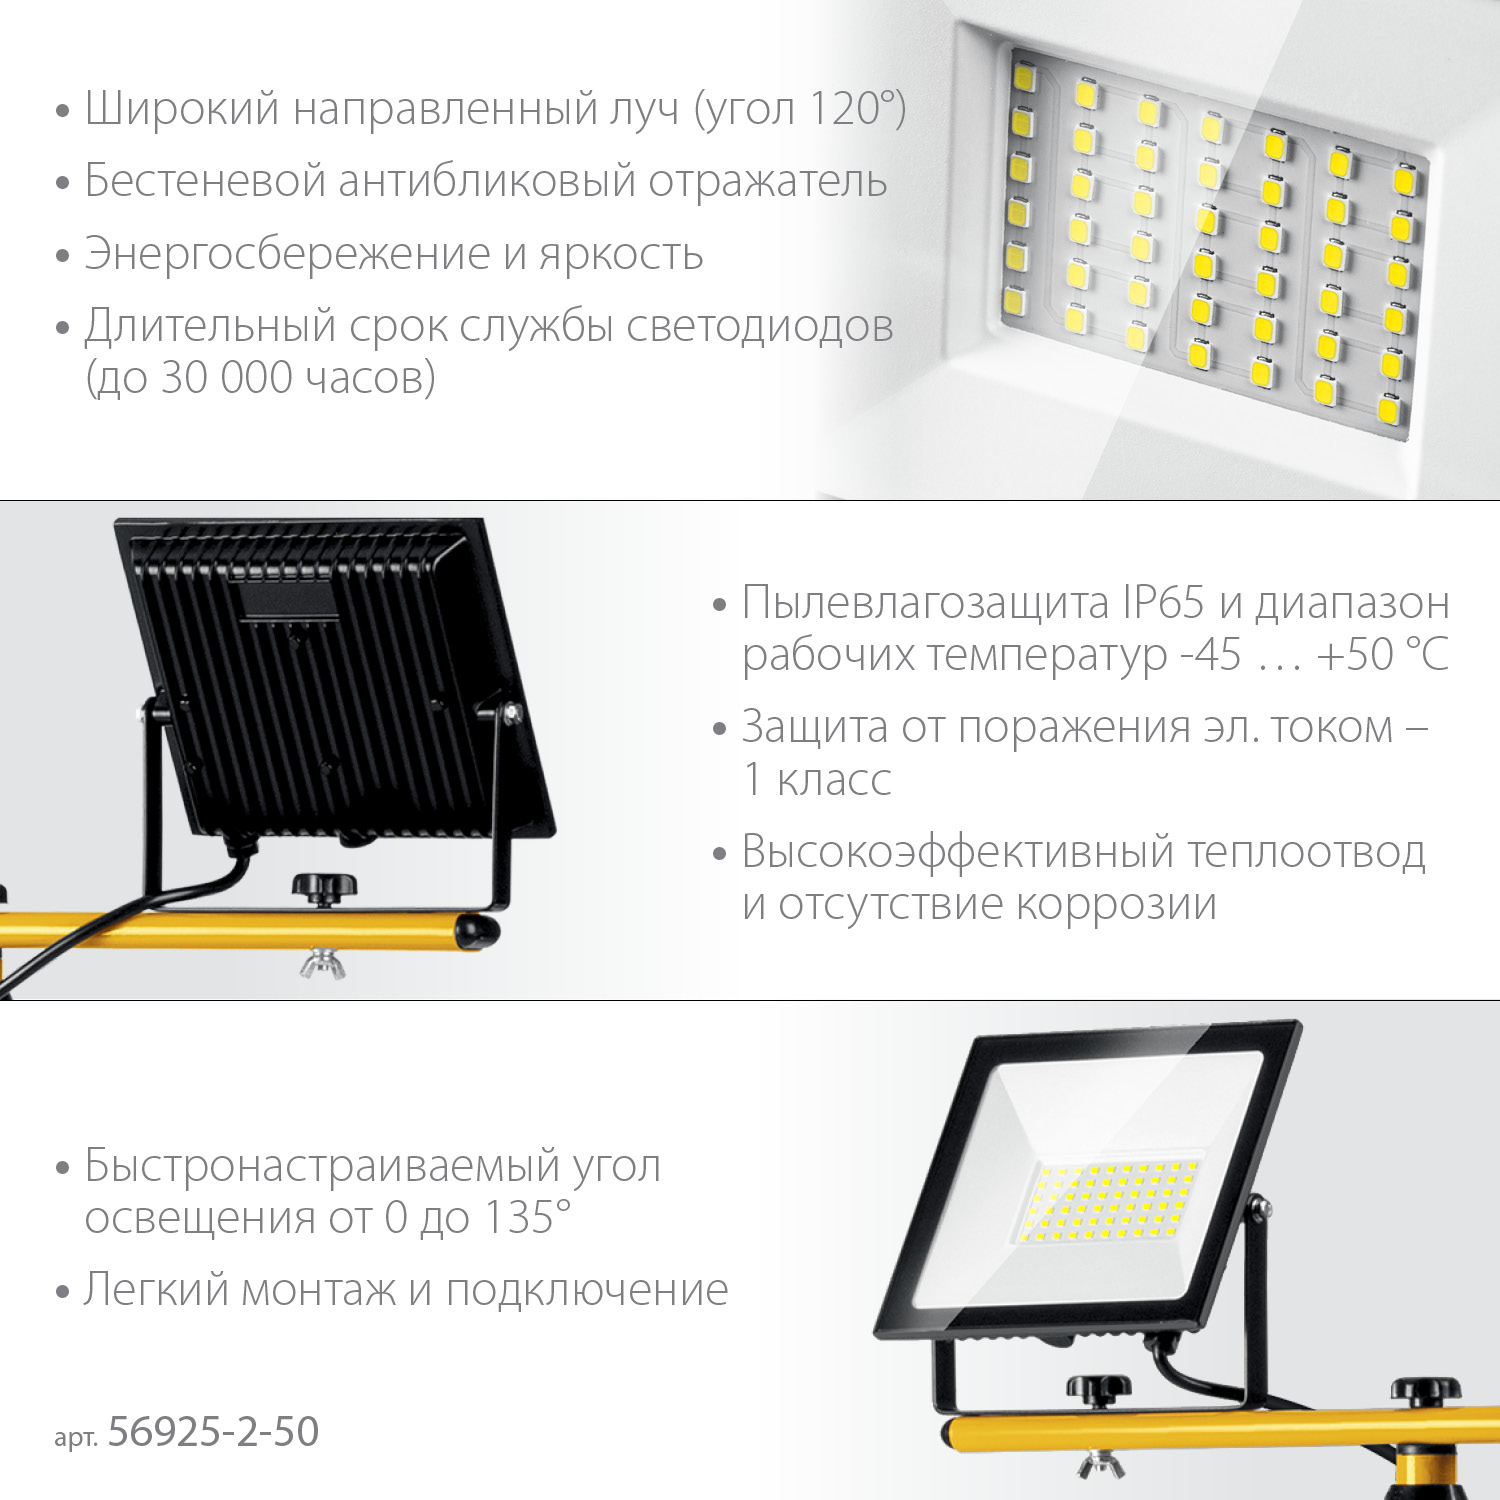 STAYER LED-MAX, 2 х 50 Вт, 6500 К, IP 65, 1.6 м, светодиодные прожекторы на штативе (56925-2-50)